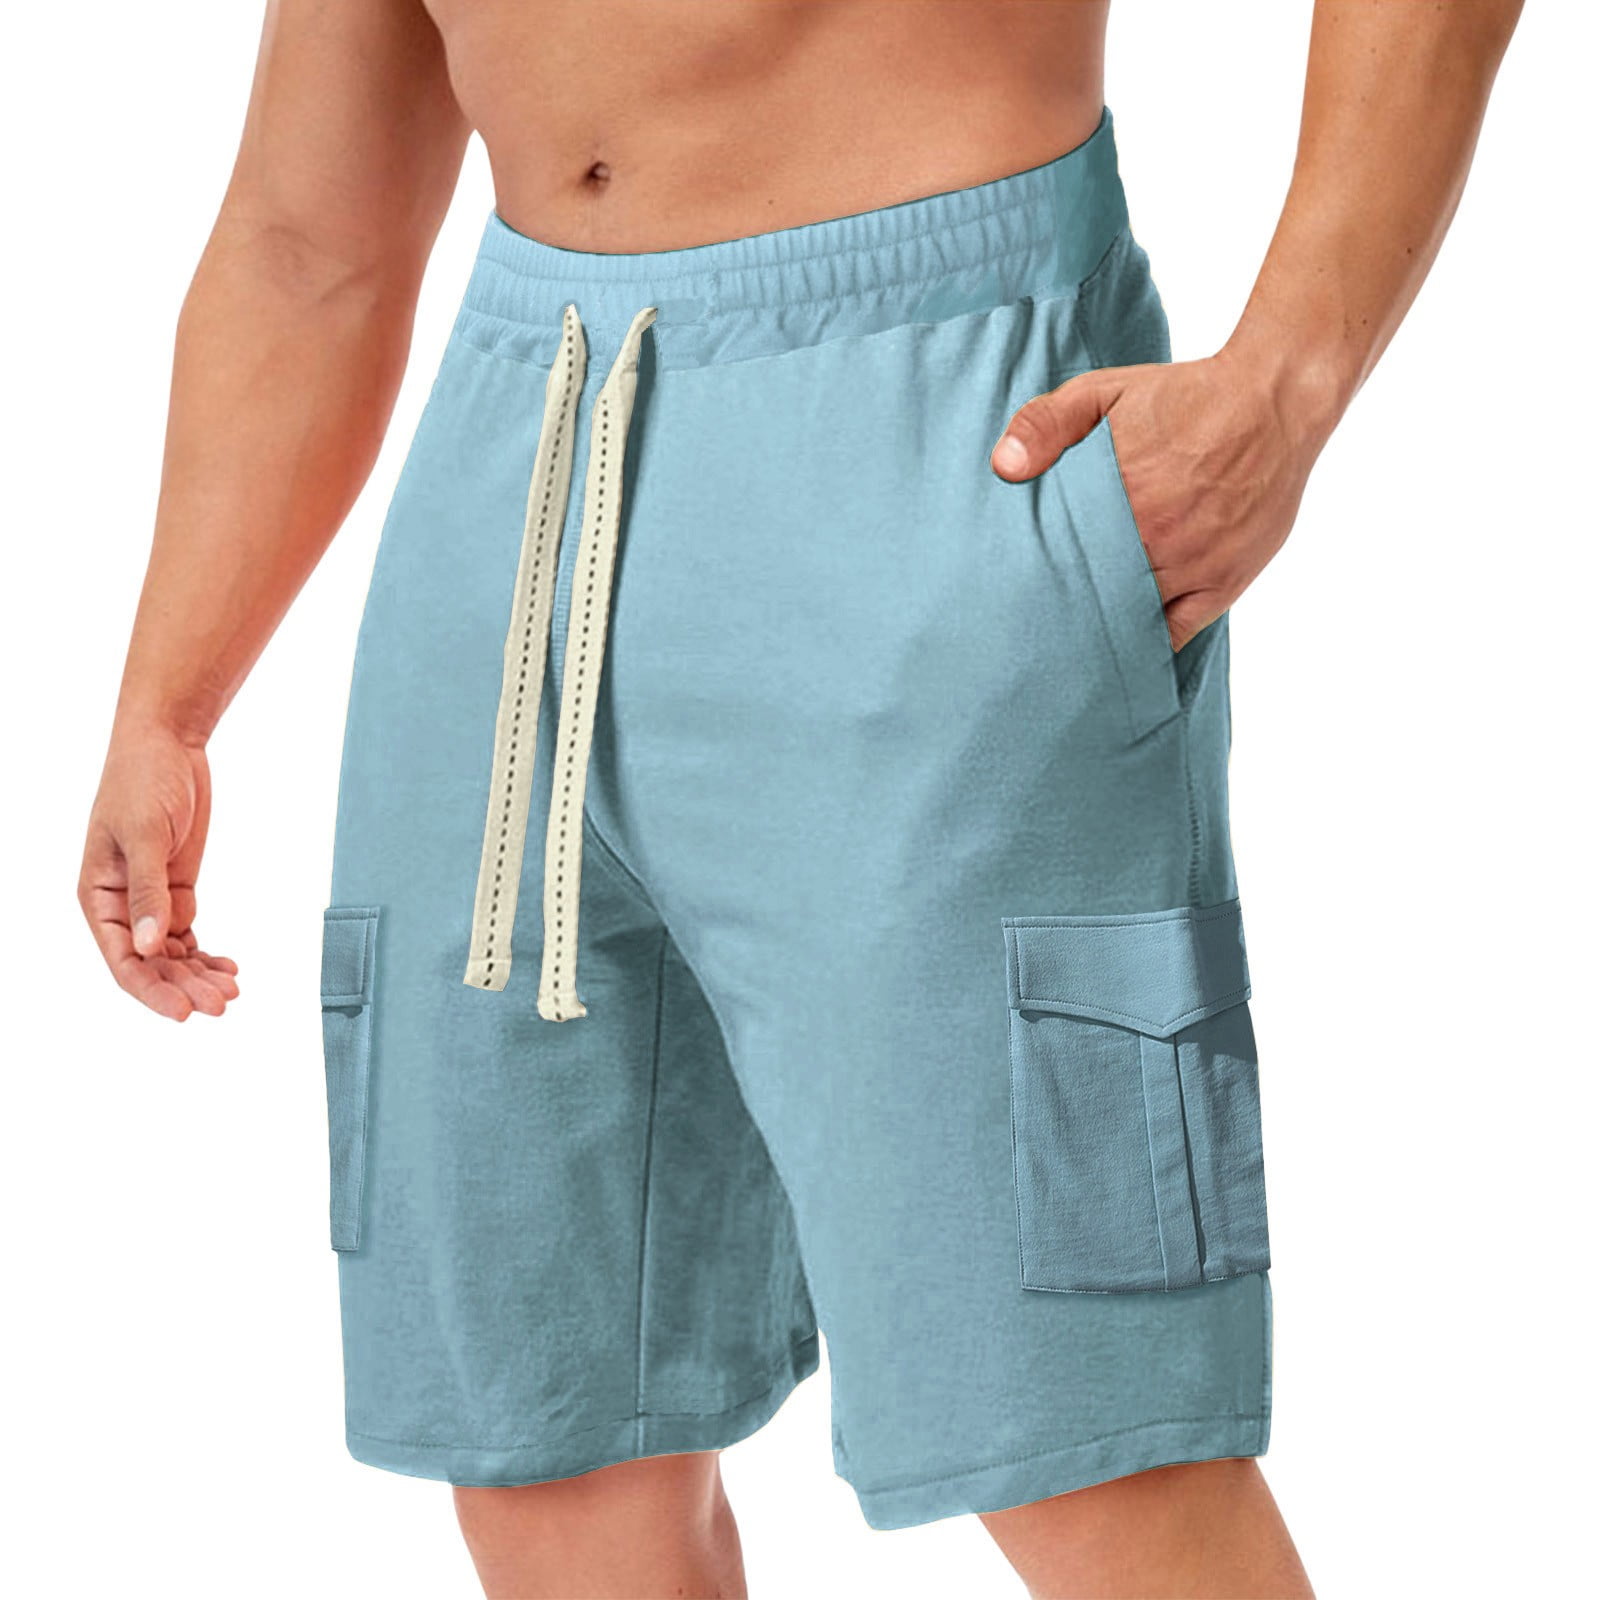 nsendm 9 Inch Inseam Shorts Men Men Solid Summer Casual Beach Shorts ...